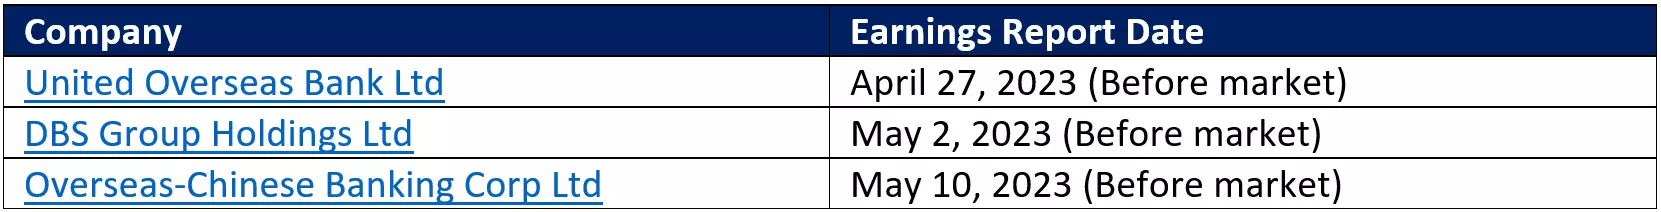 Singapore bank earnings dates